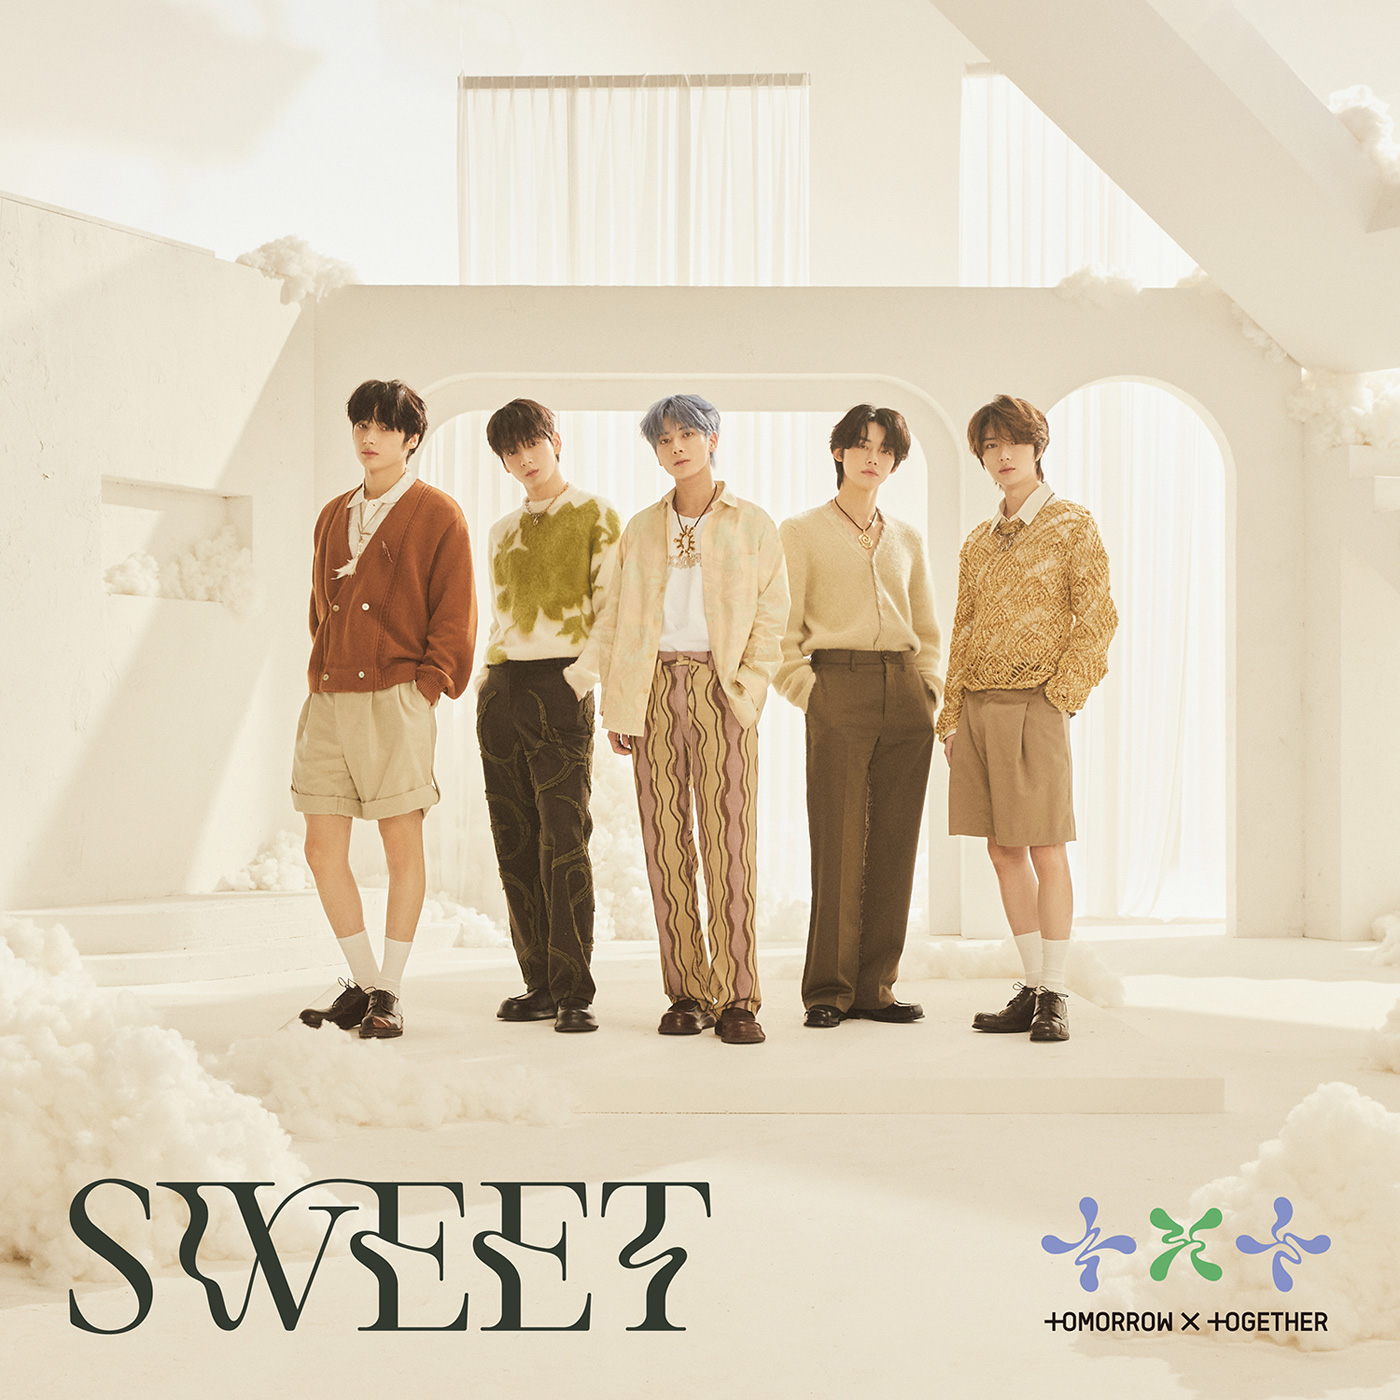 TOMORROW X TOGETHERいきなり最高売り上げ 新アルバム「SWEET」初登場1位 